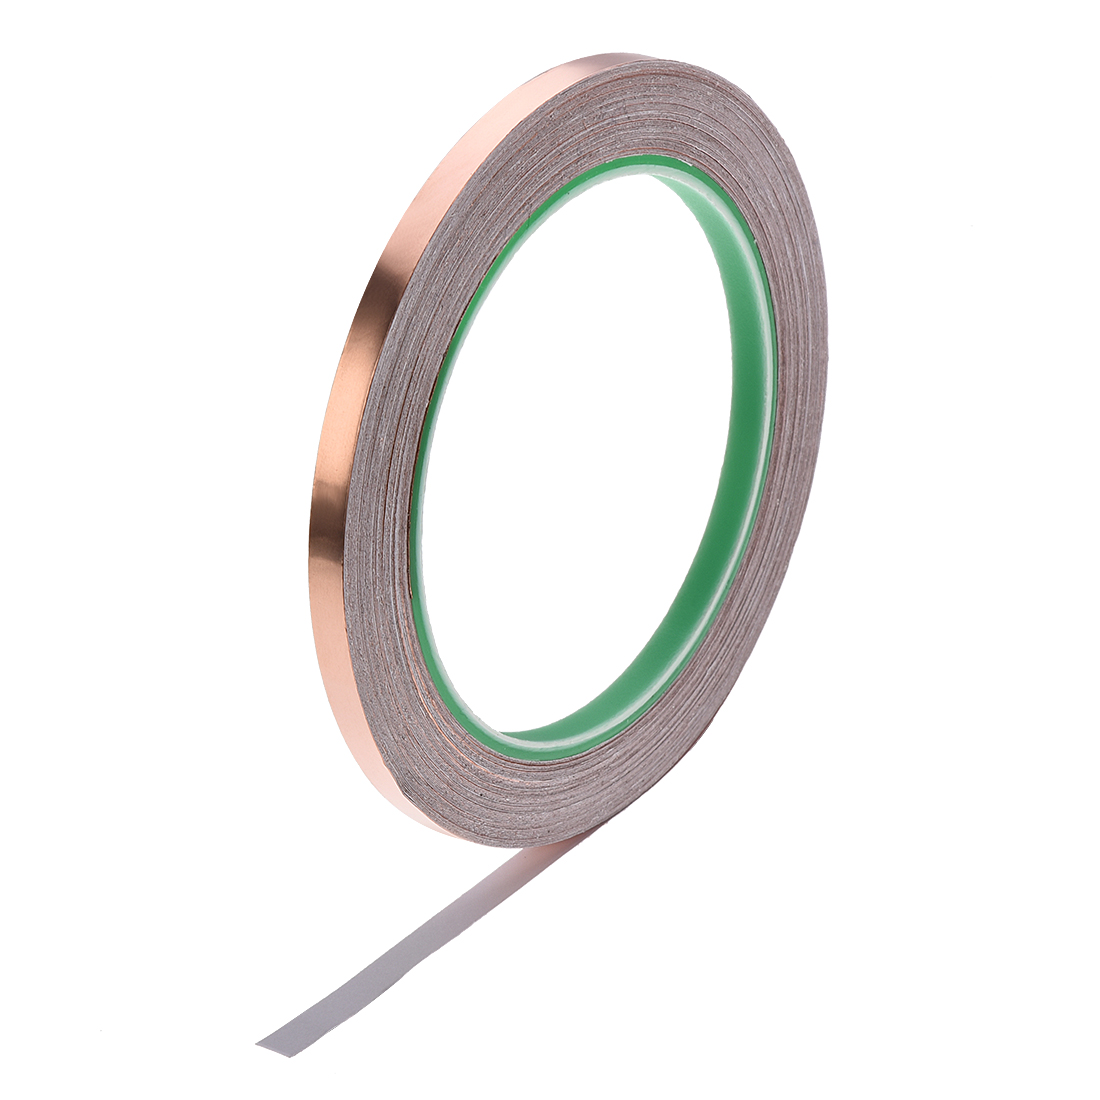 Unique Bargains 6mm Copper Foil Tape for EMI EMF and RFI Shielding 20m/65.6ft